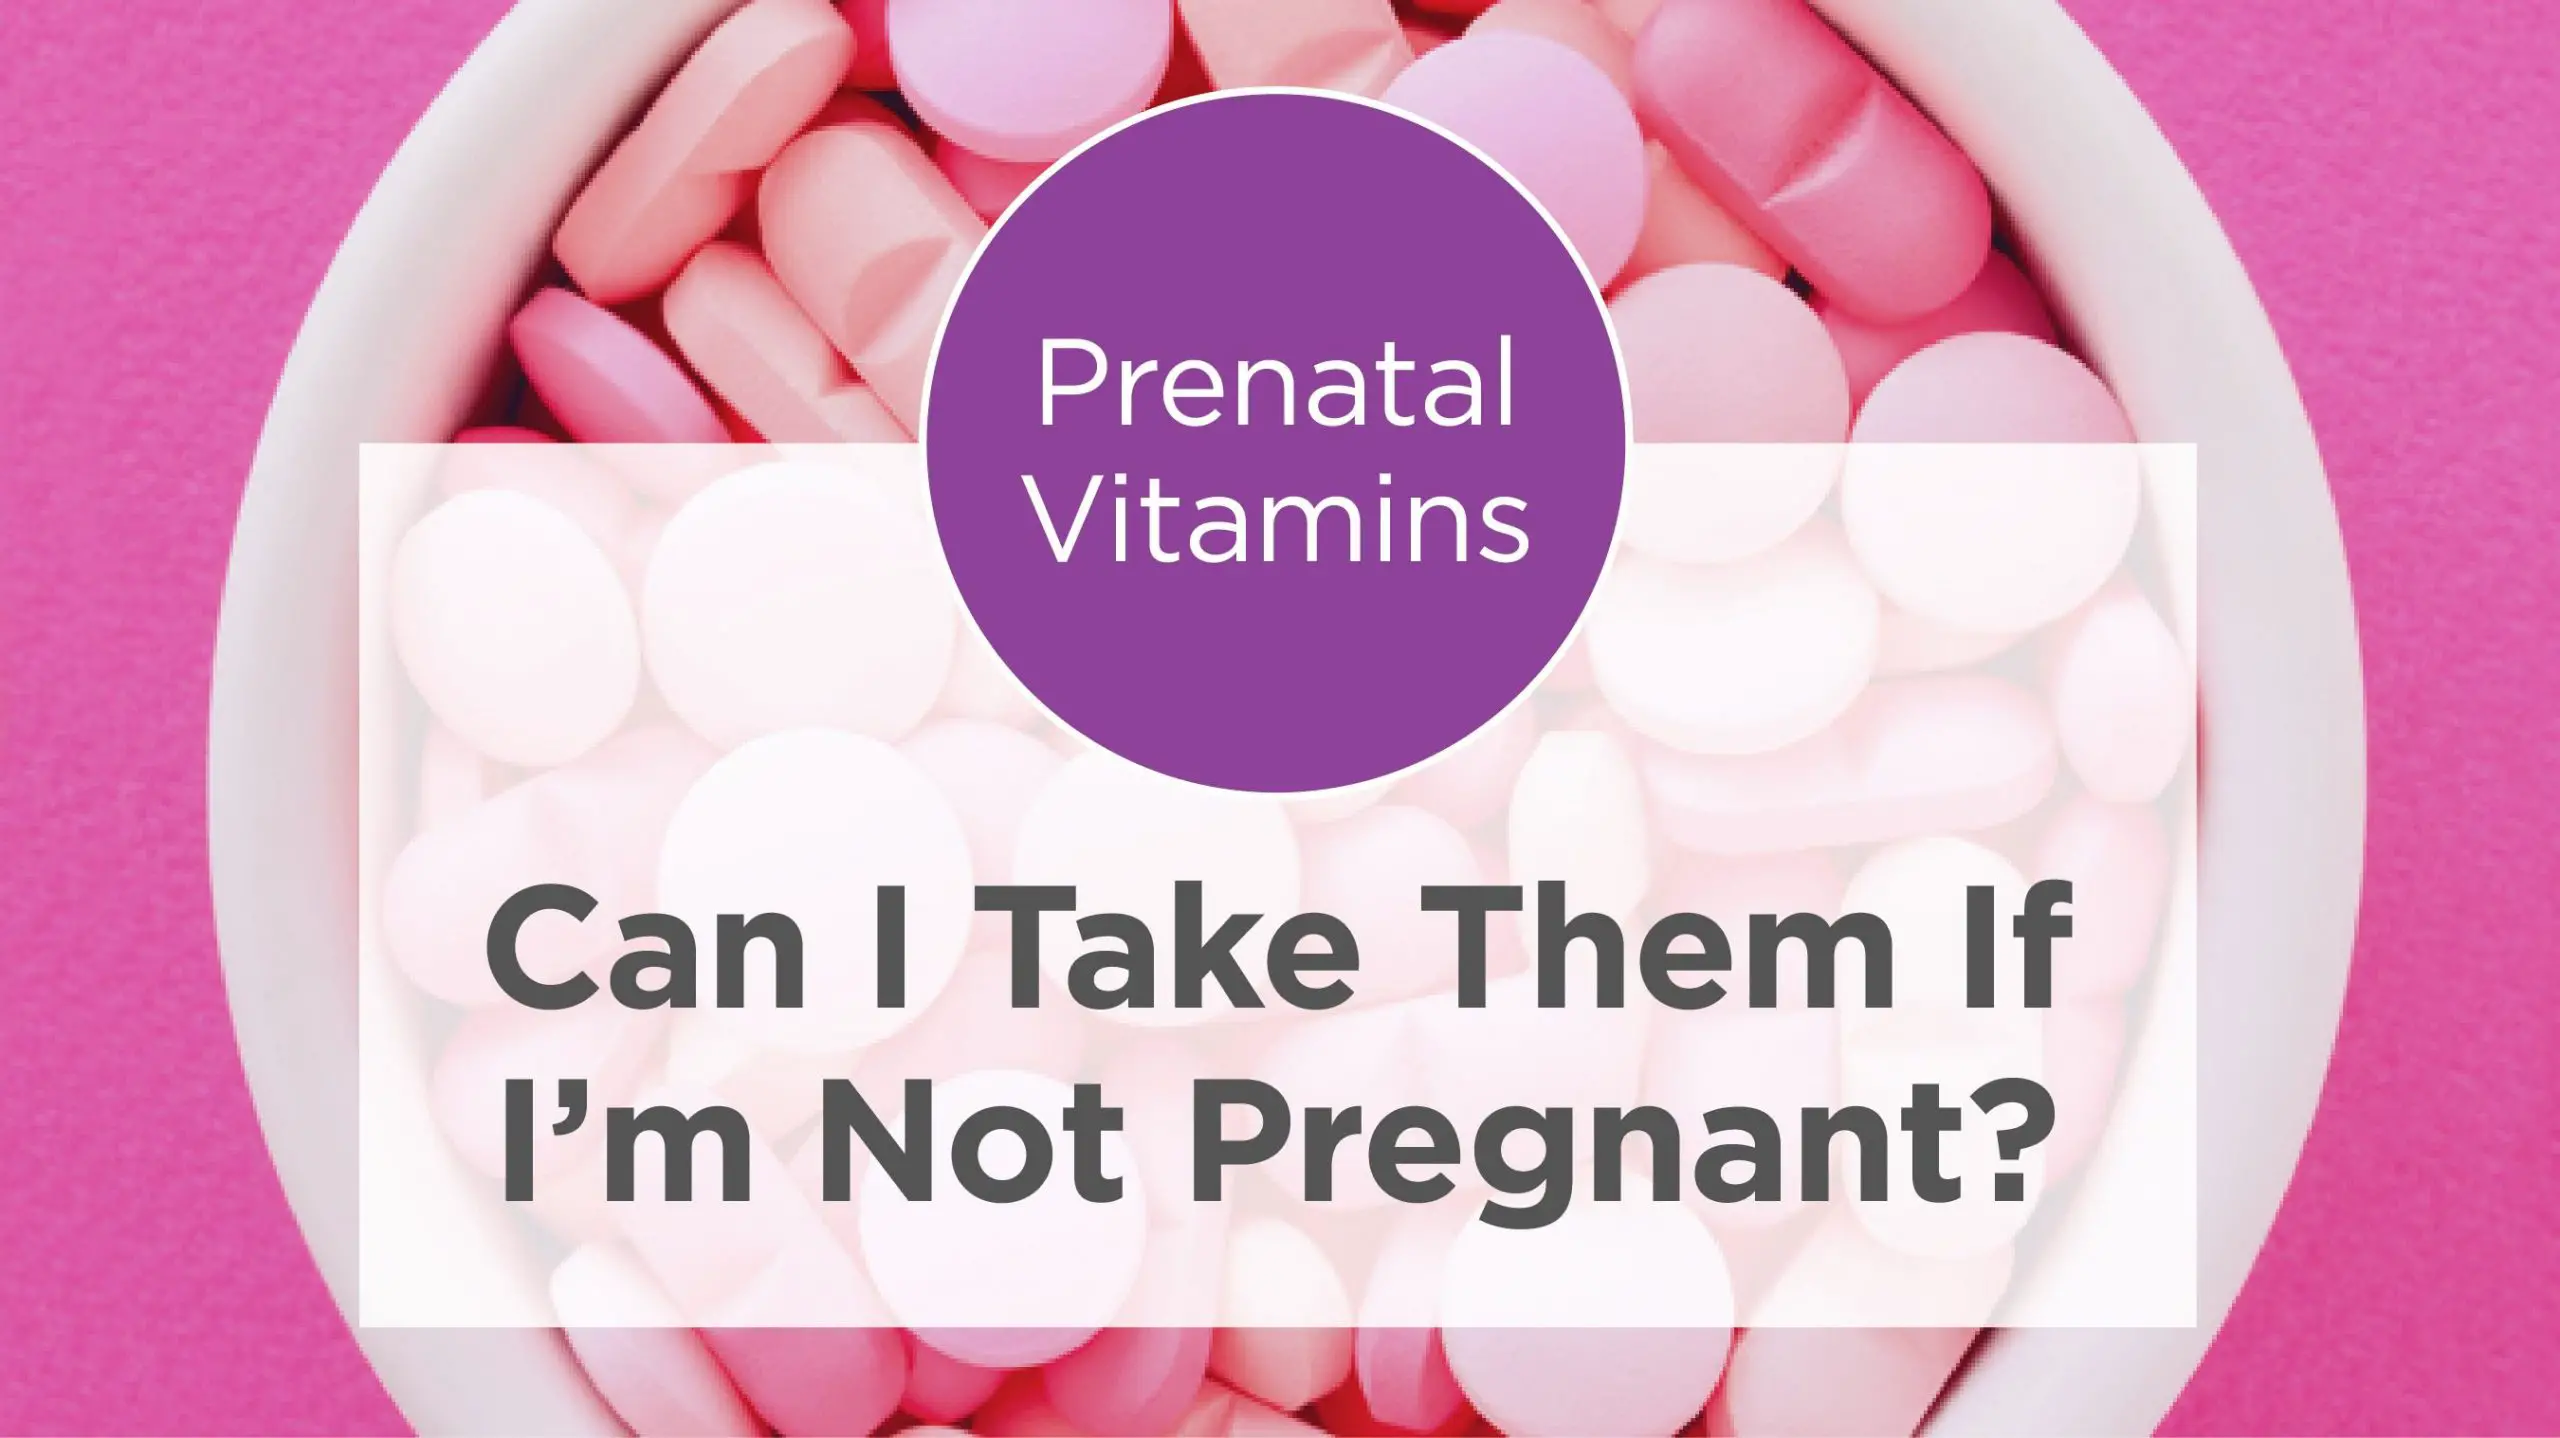 Prenatal Vitamins While Not Pregnant: Can I Take Them?